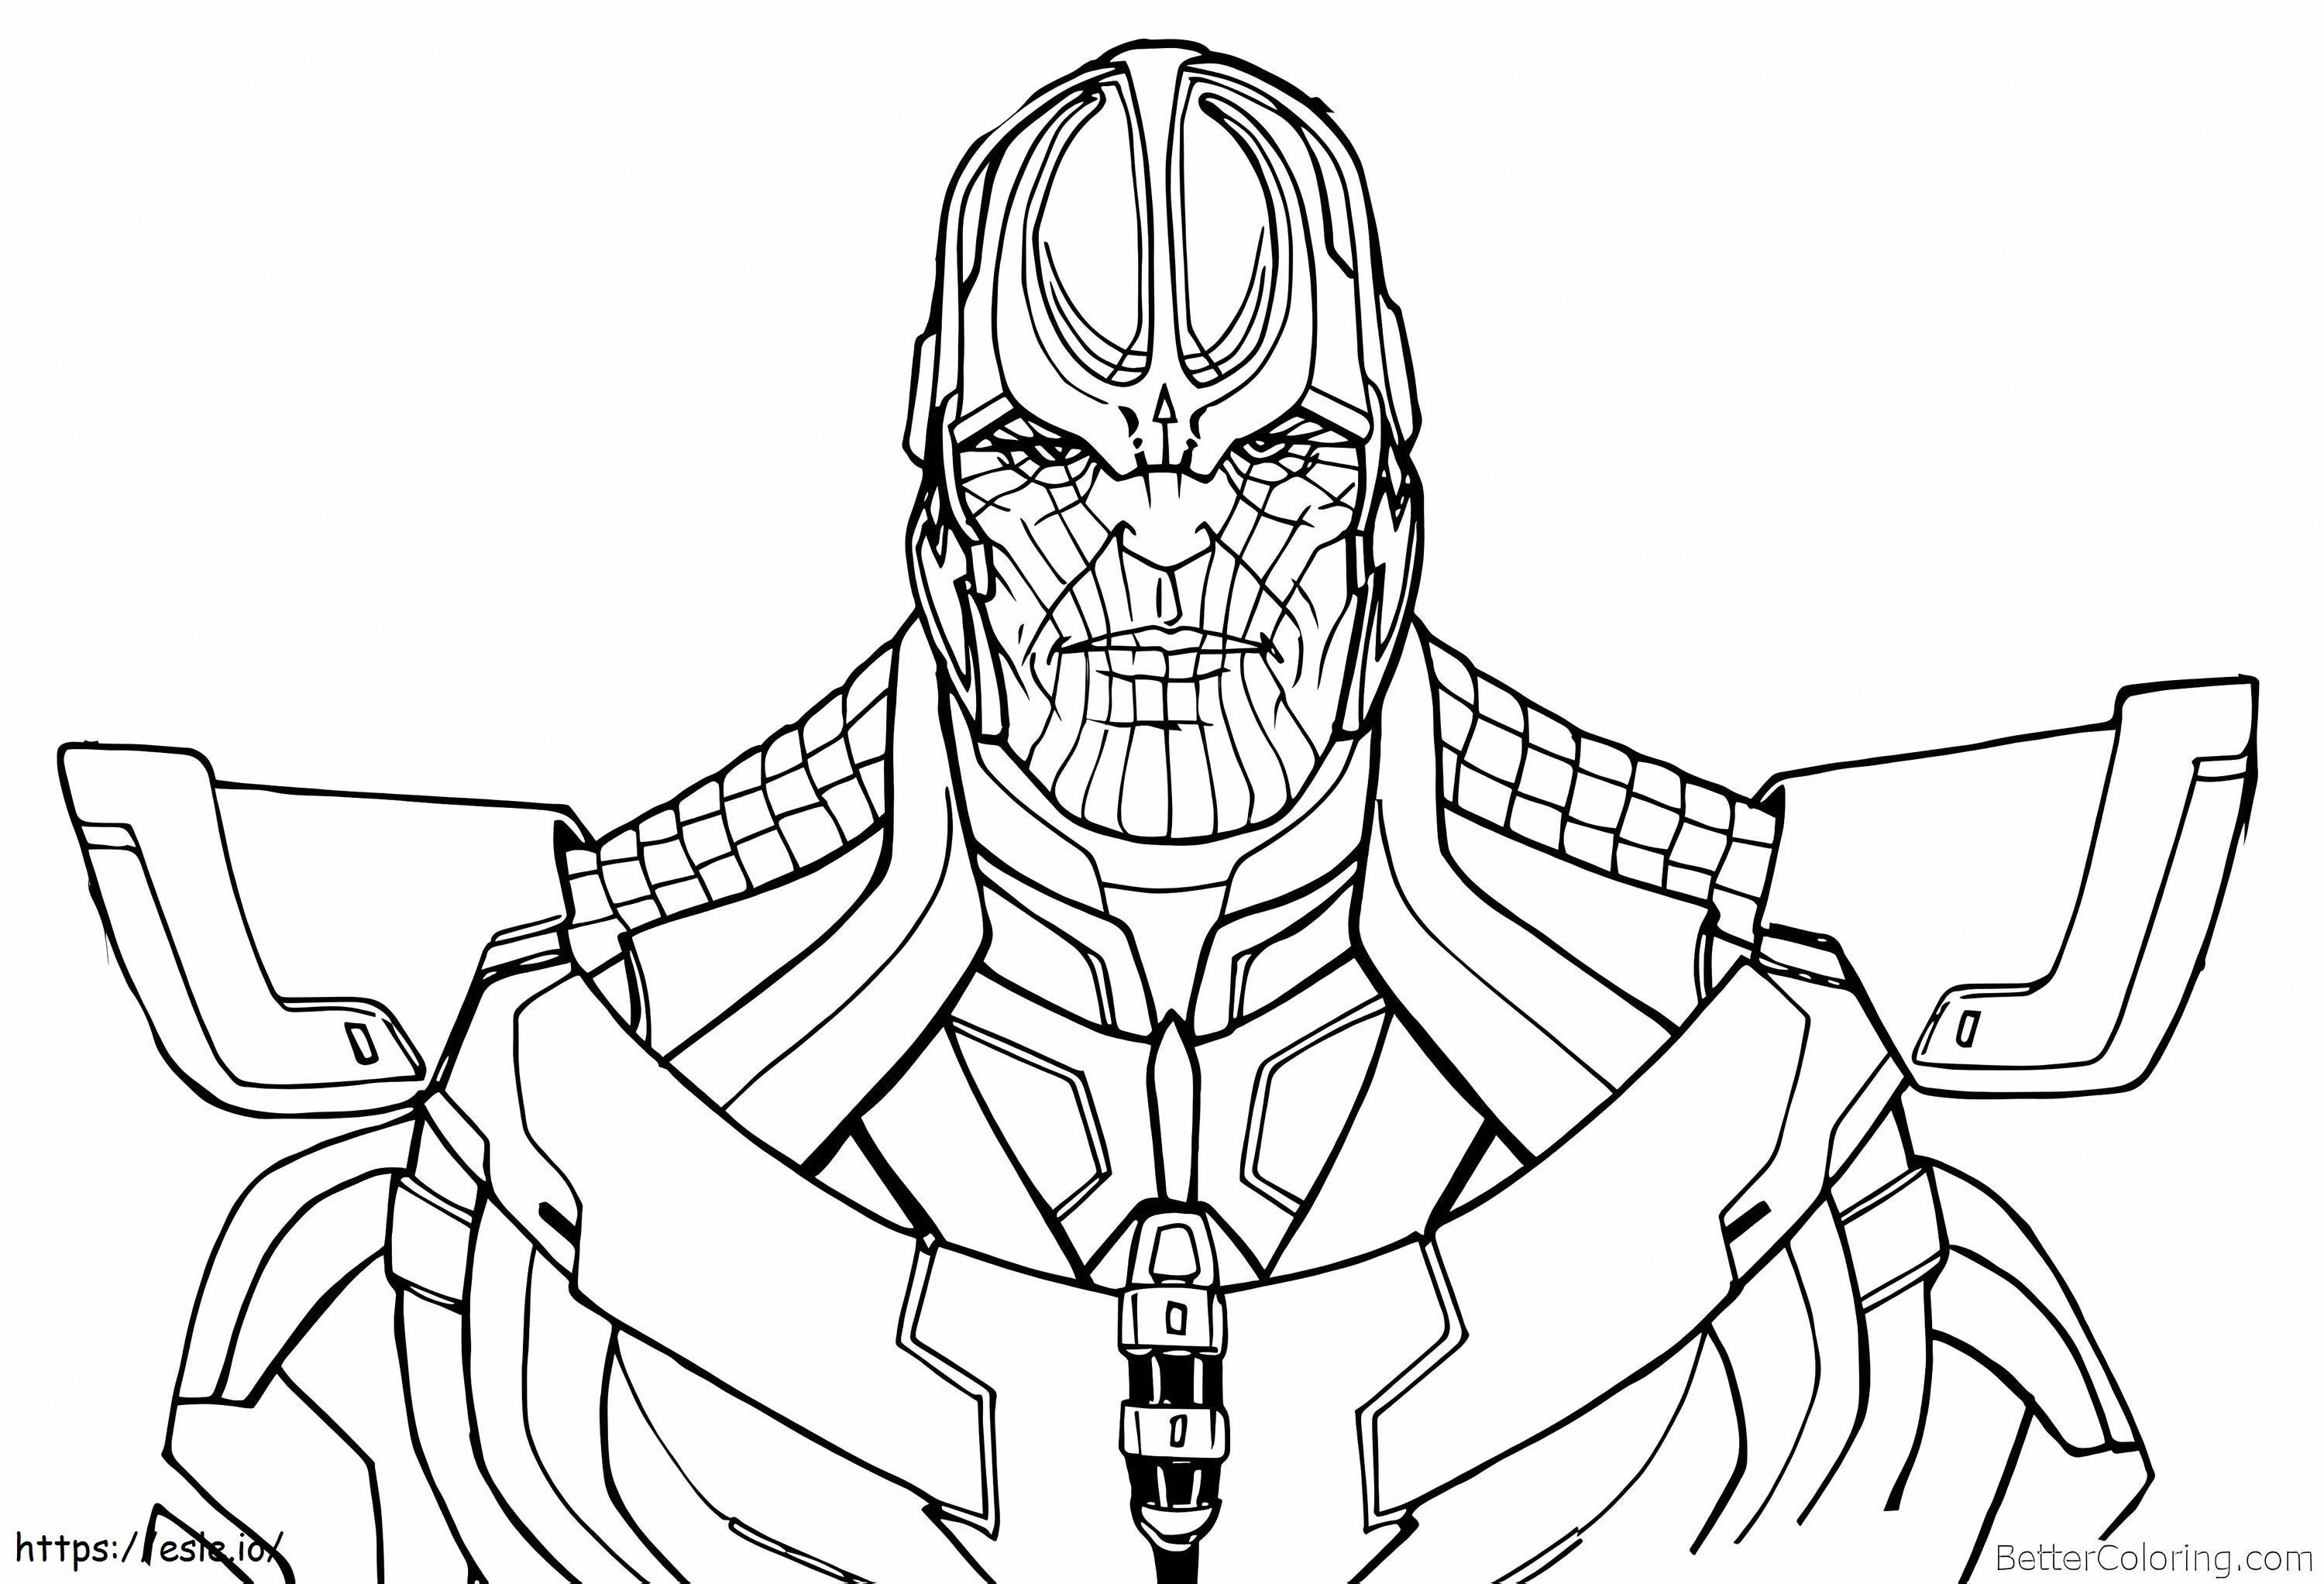 1540288368 Avengers Infinity War Çizgi Çiziminden Thanos boyama